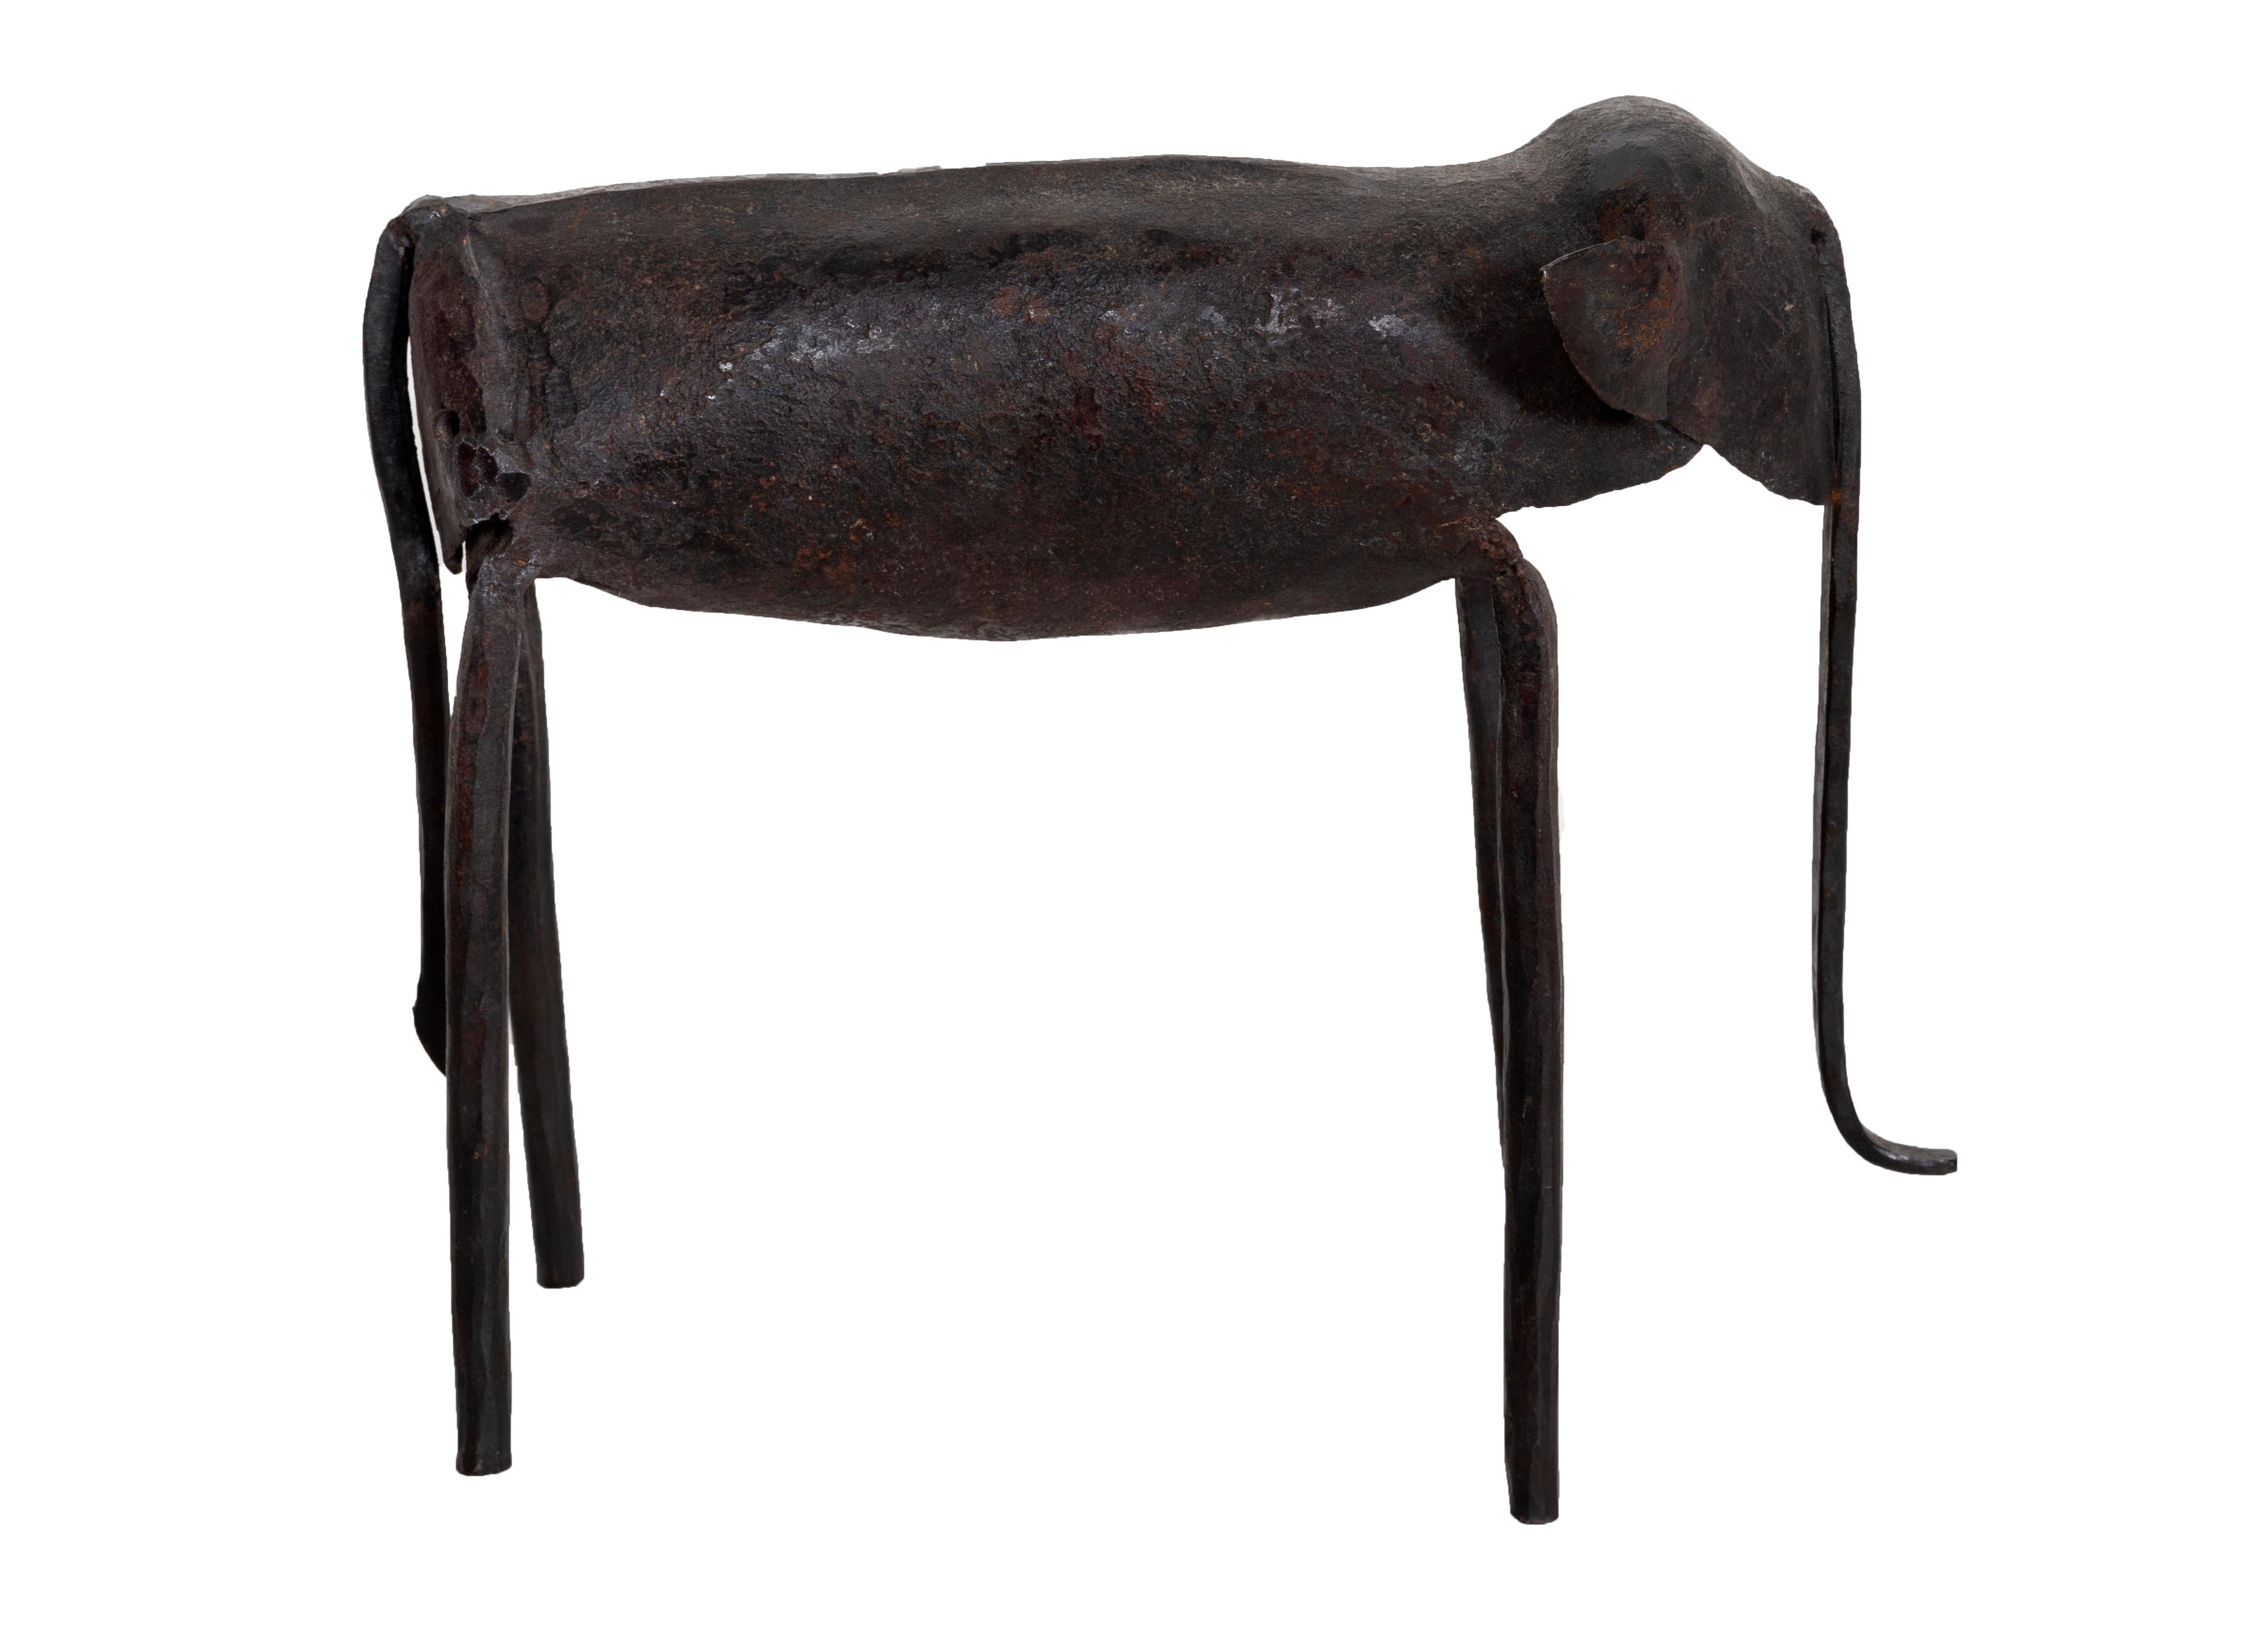 Modern Iron Elephant Sculpture - Black Figurative Sculpture by Unknown